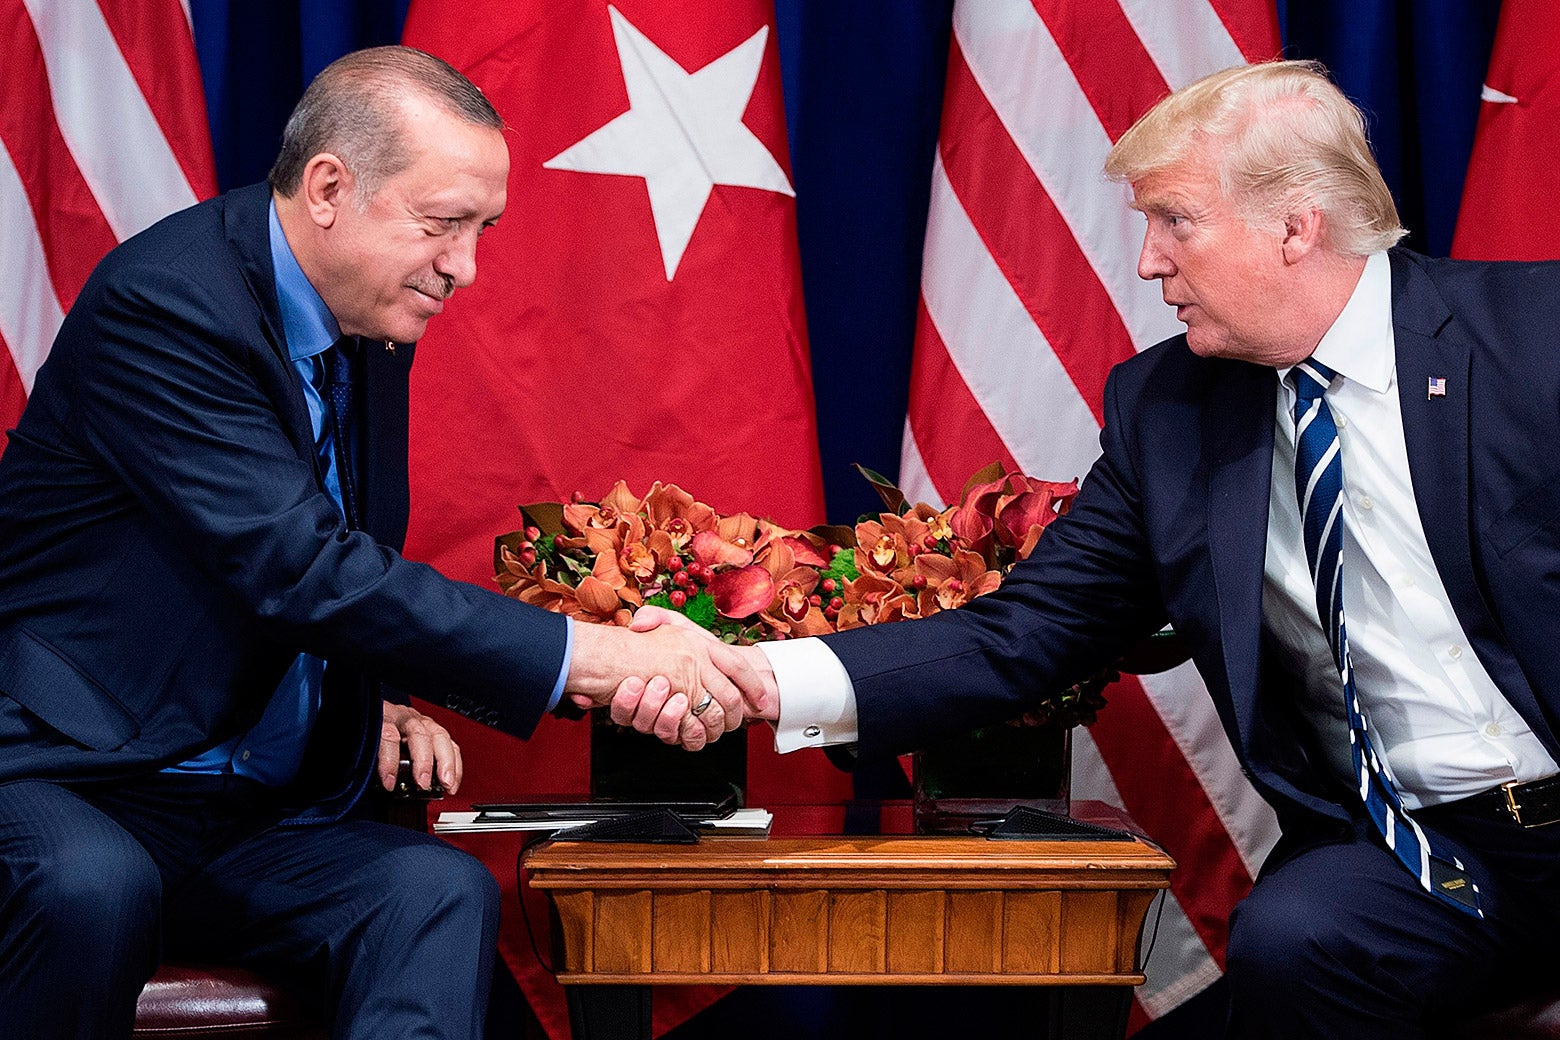 Recep Tayyip Erdogan and Donald Trump, seated, shake hands.